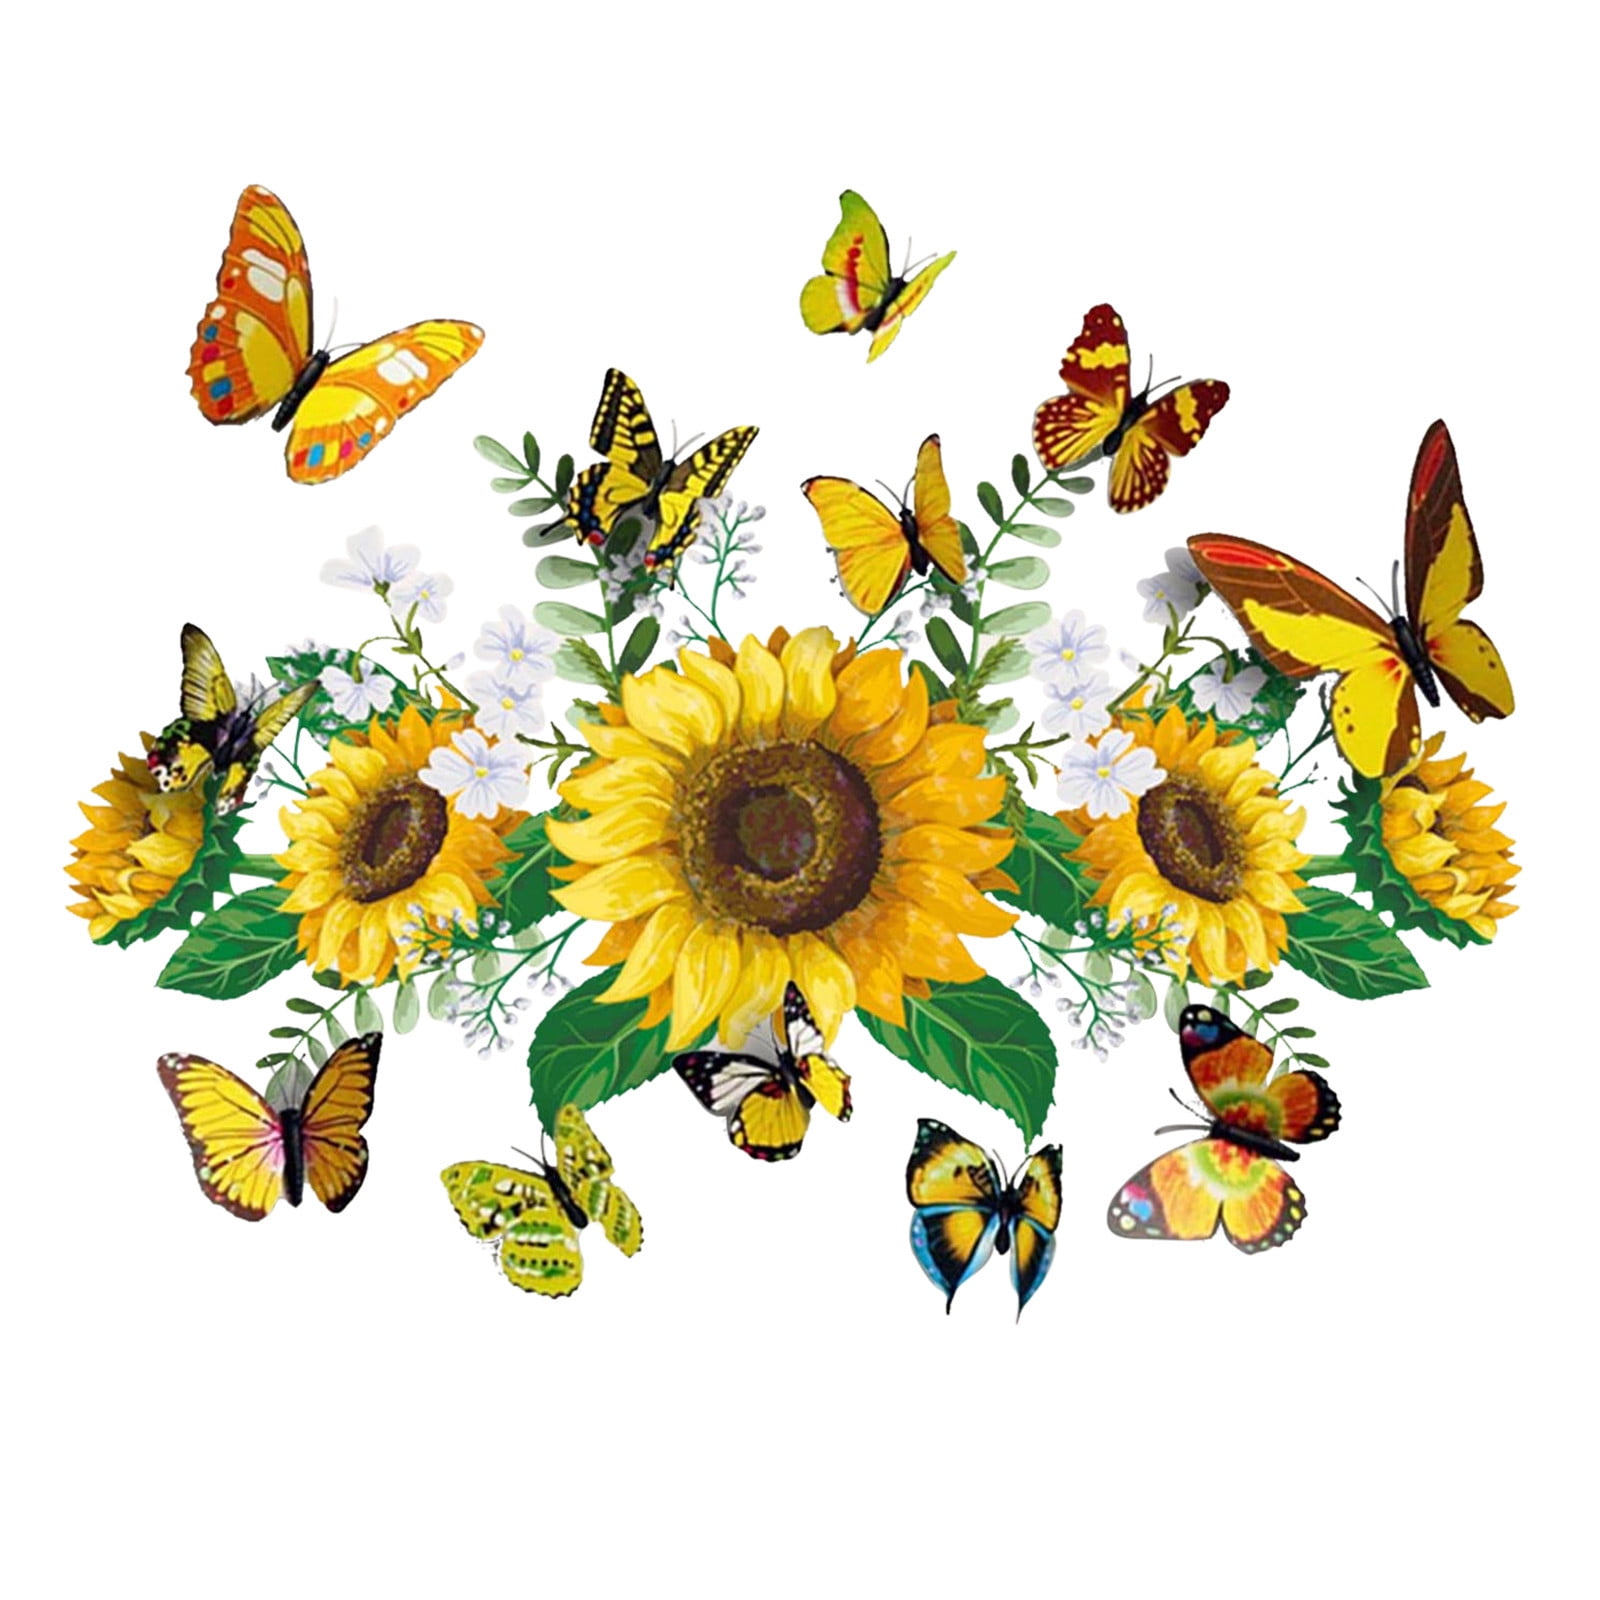 Sunflowers Butterfly Wall Stickers Transparent Border Vinyl Home Art Decal Decor 